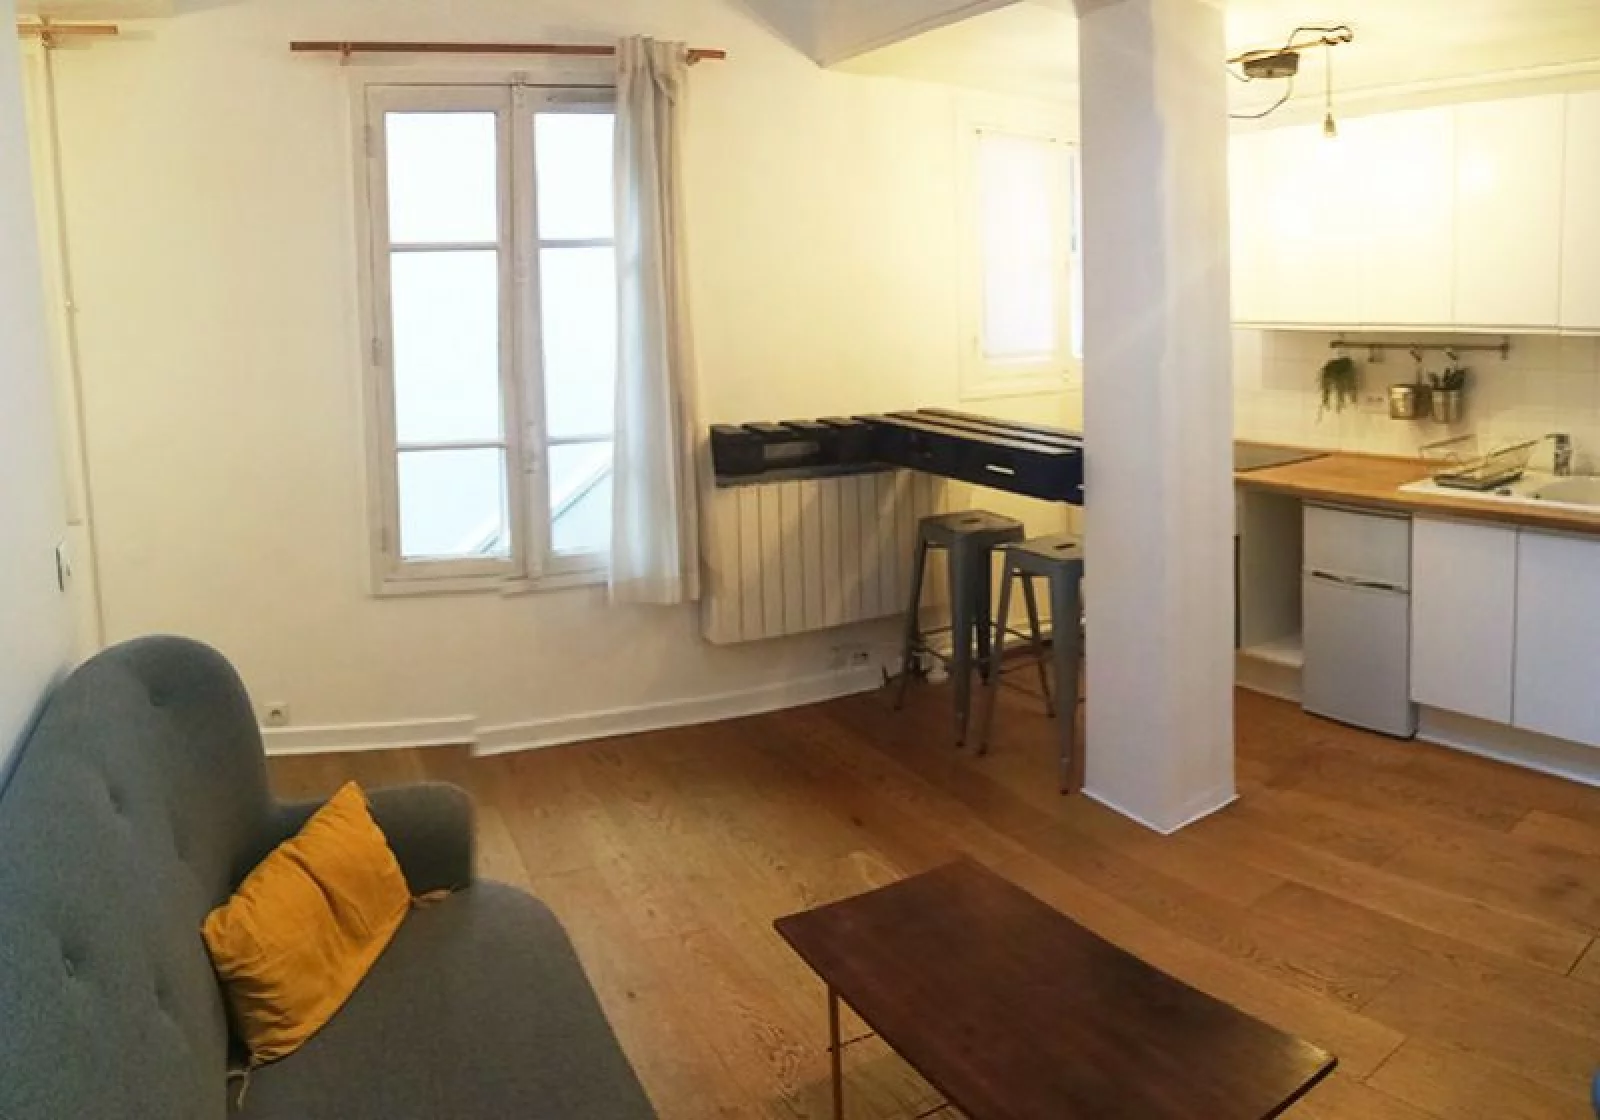 Location studio duplex meublé 22 m² (Paris 18)